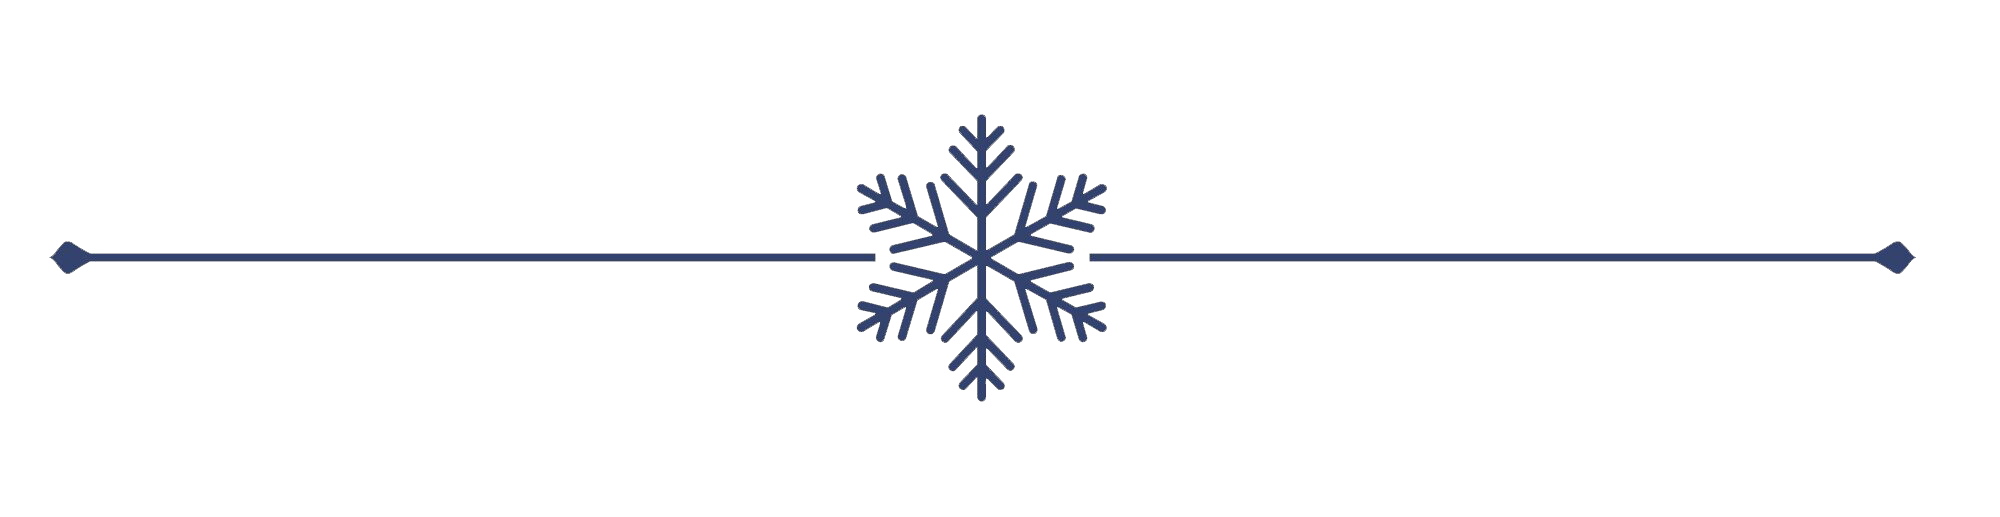 snowflake-clipart-divider-9.png